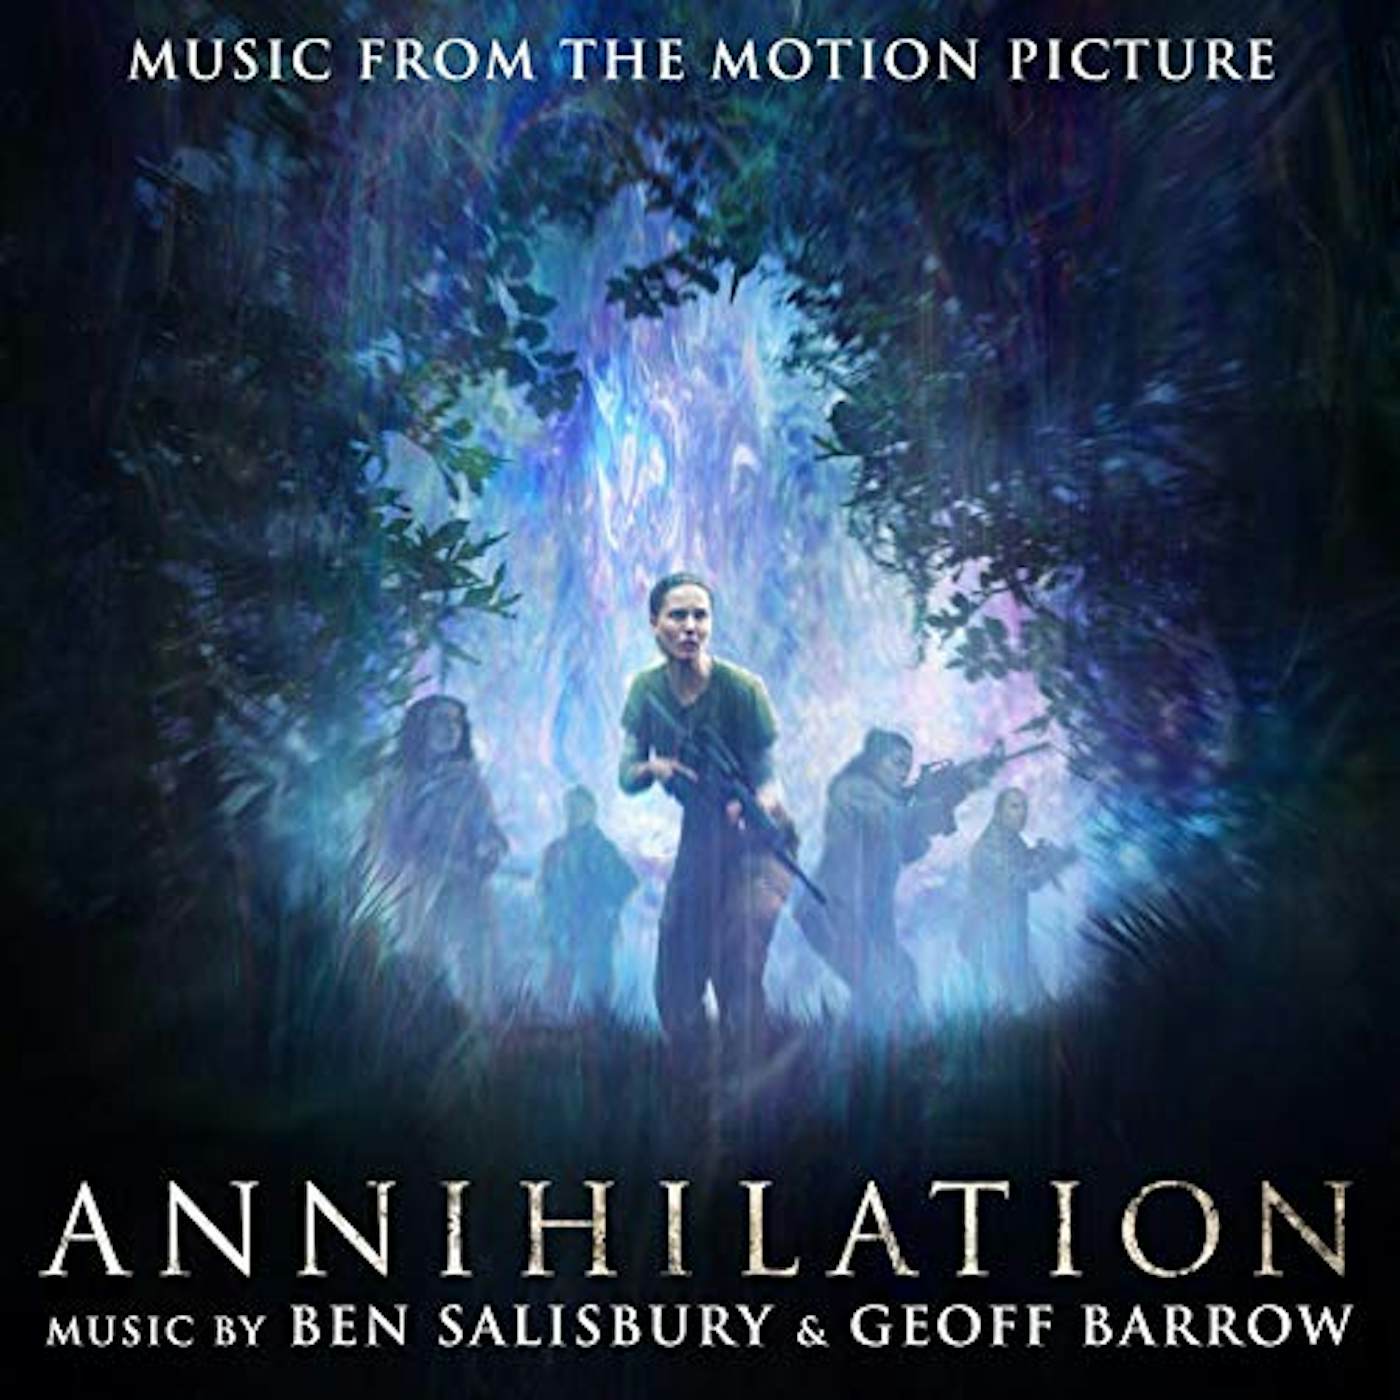 Ben Salisbury ANNIHILATION - Original Soundtrack Vinyl Record